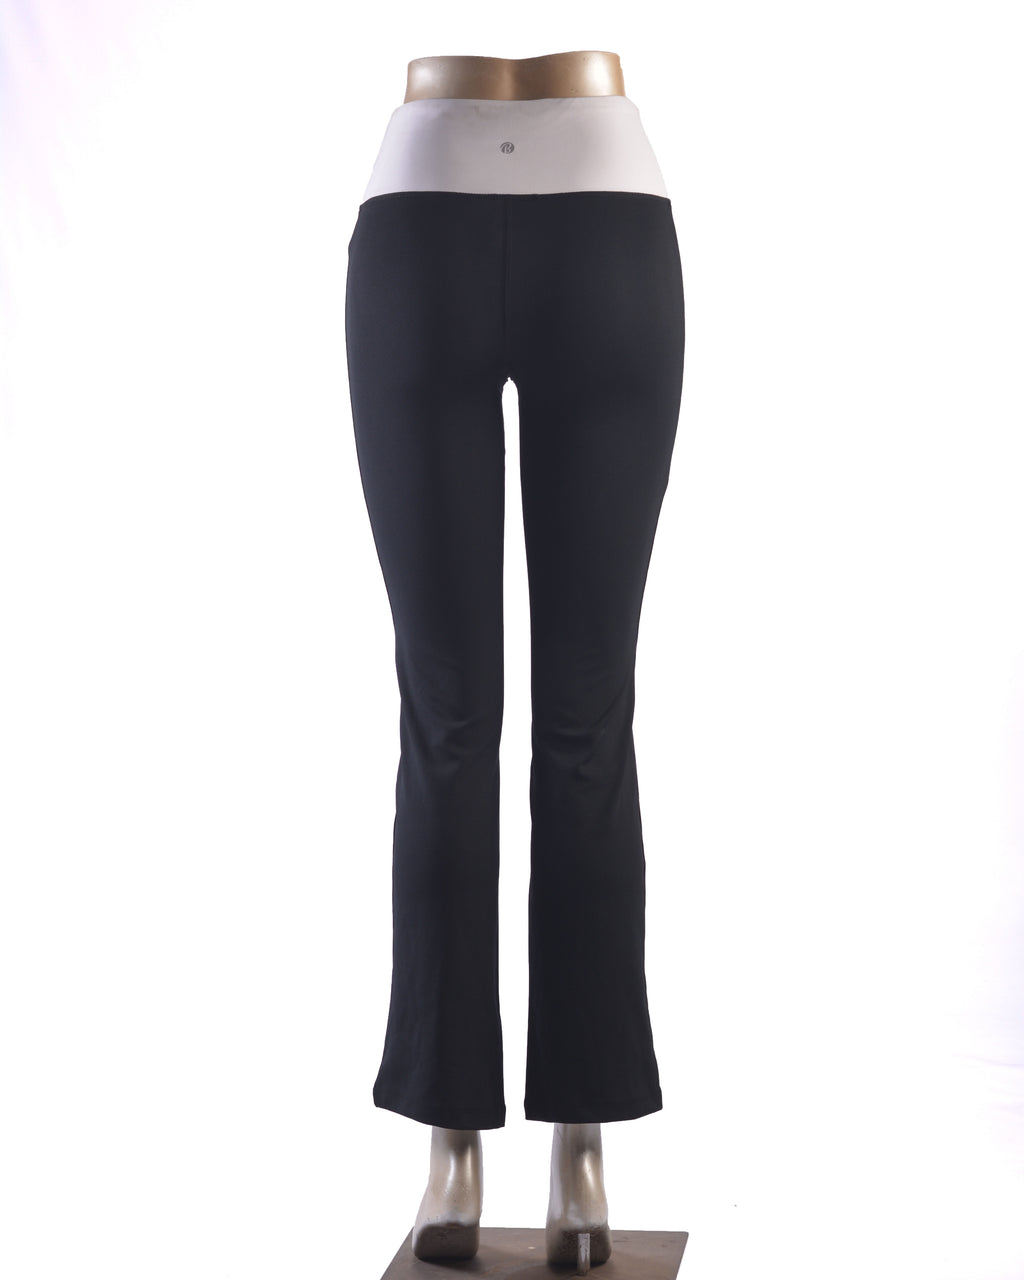 Bally Fold-Over Flare Yoga Pant Black And White